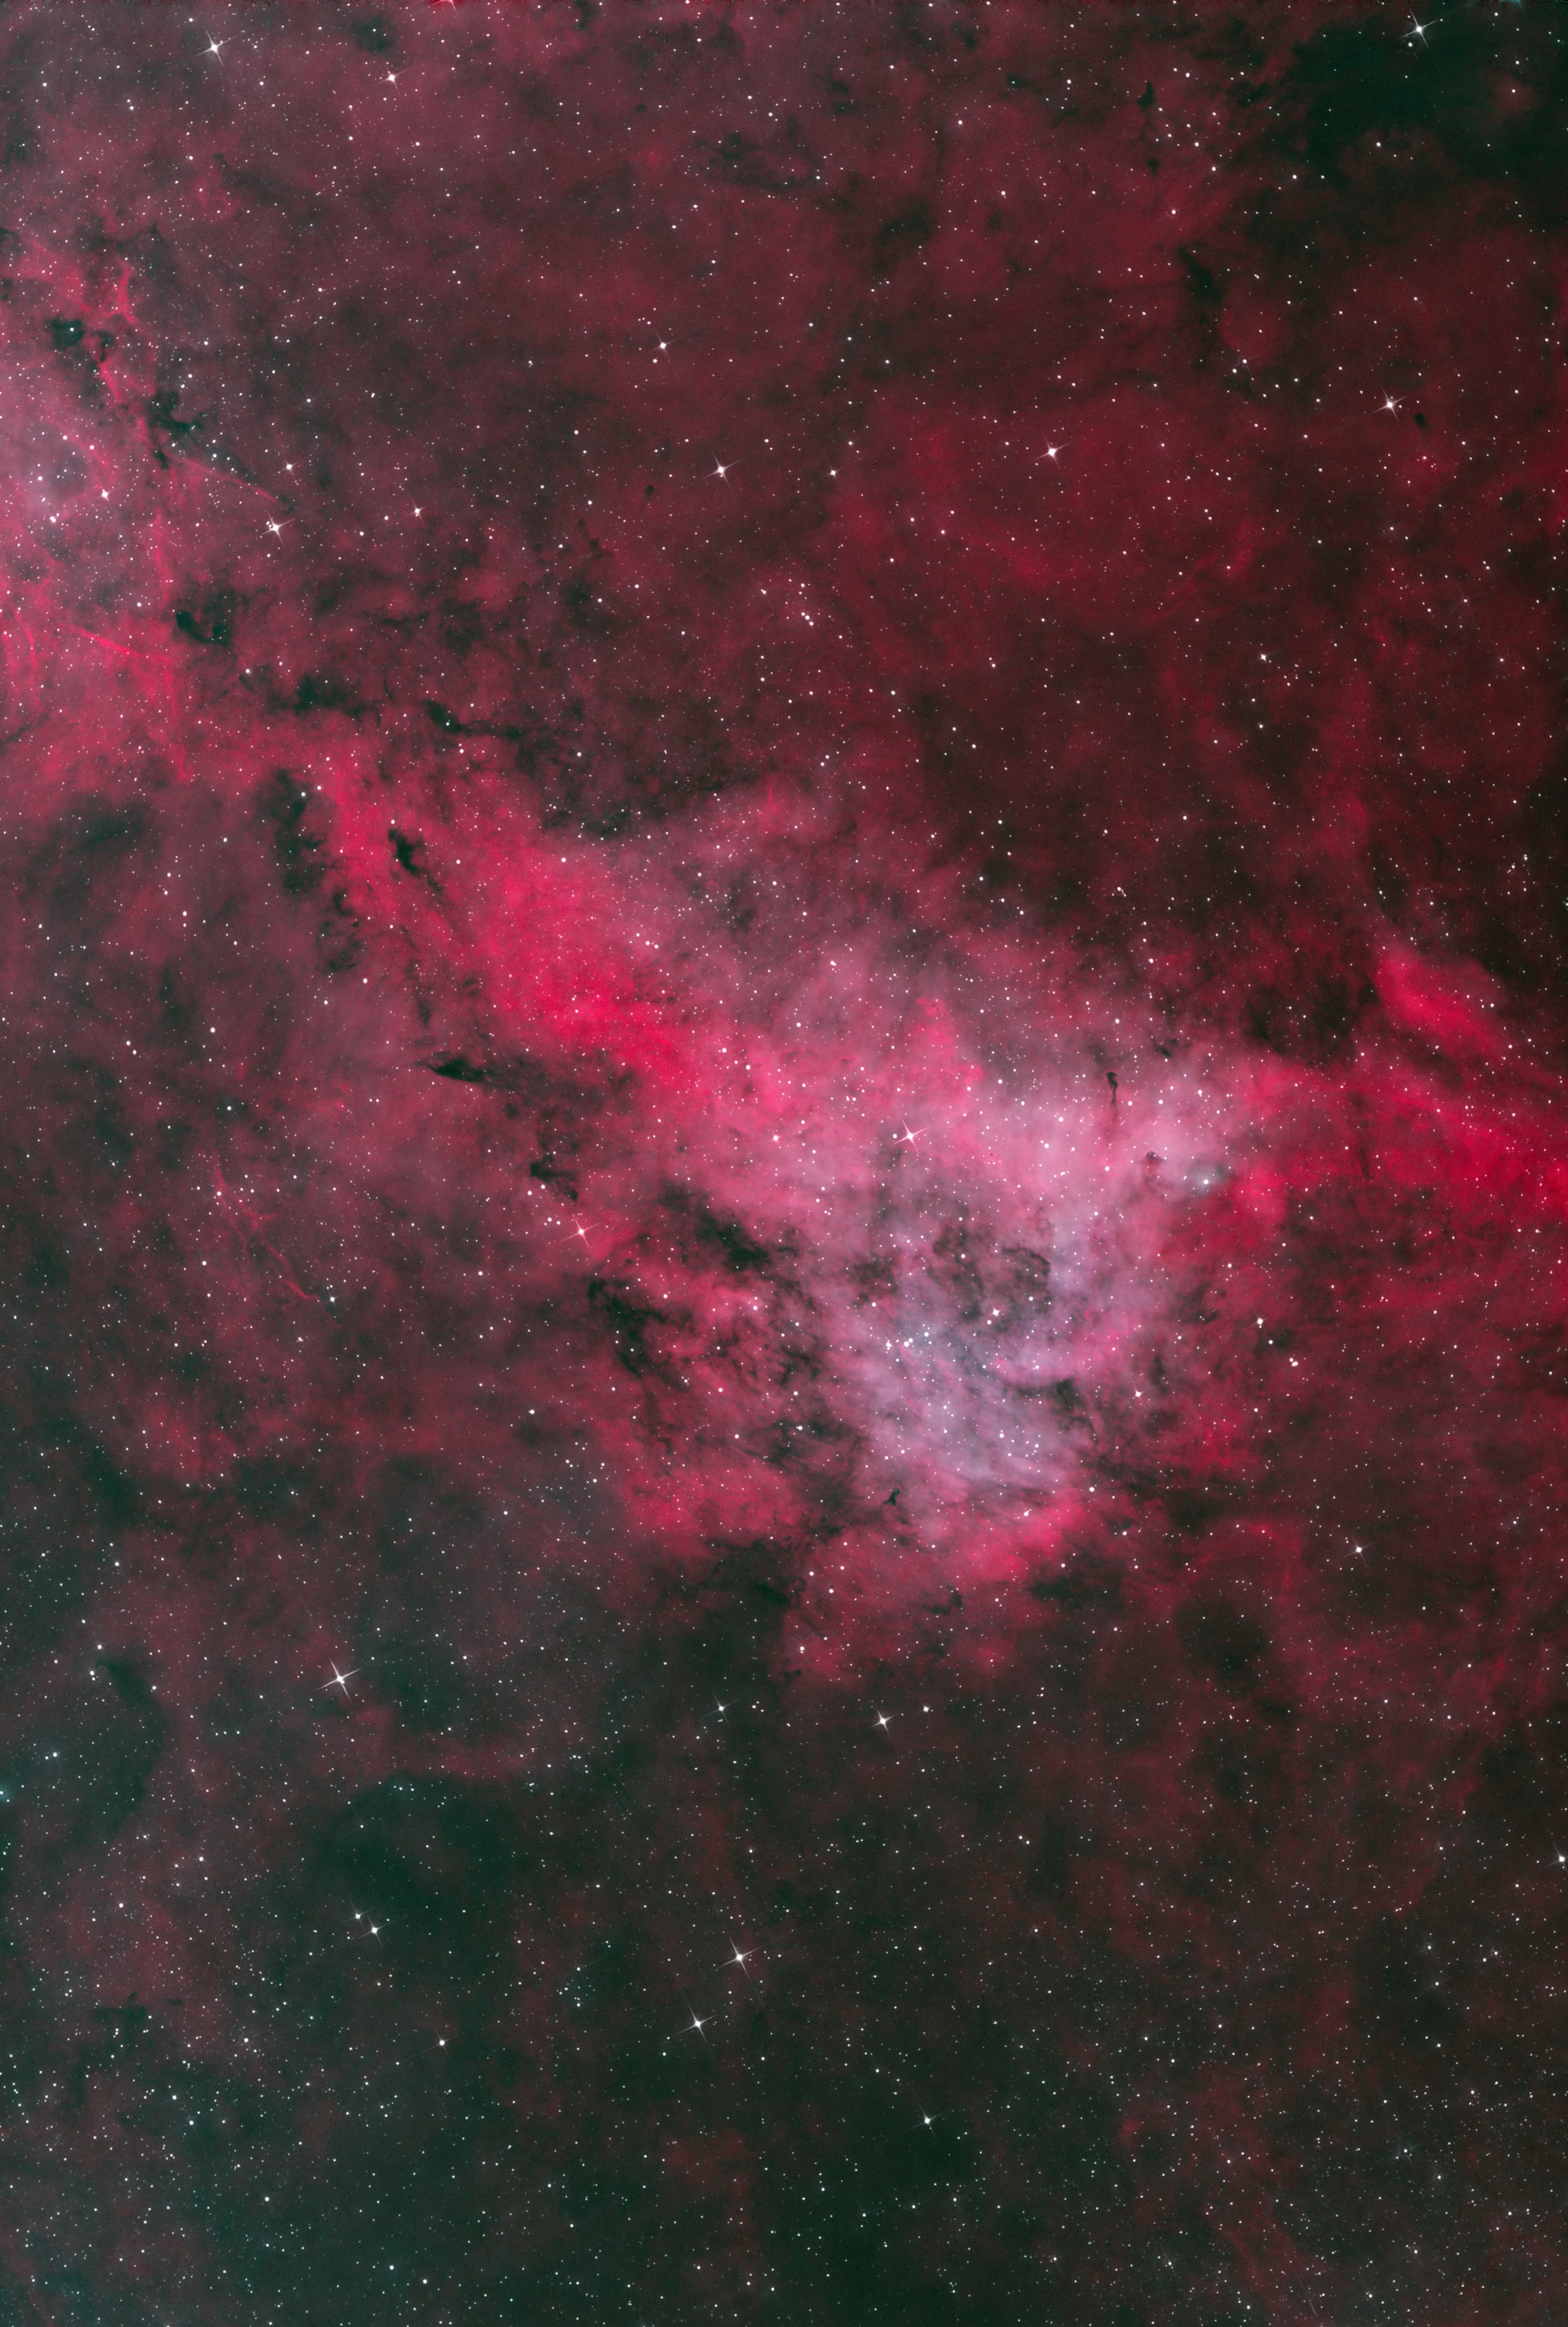 LBN 251_Longhorn nebula_Bicolor_Ha bigger stars_best_sm.jpg